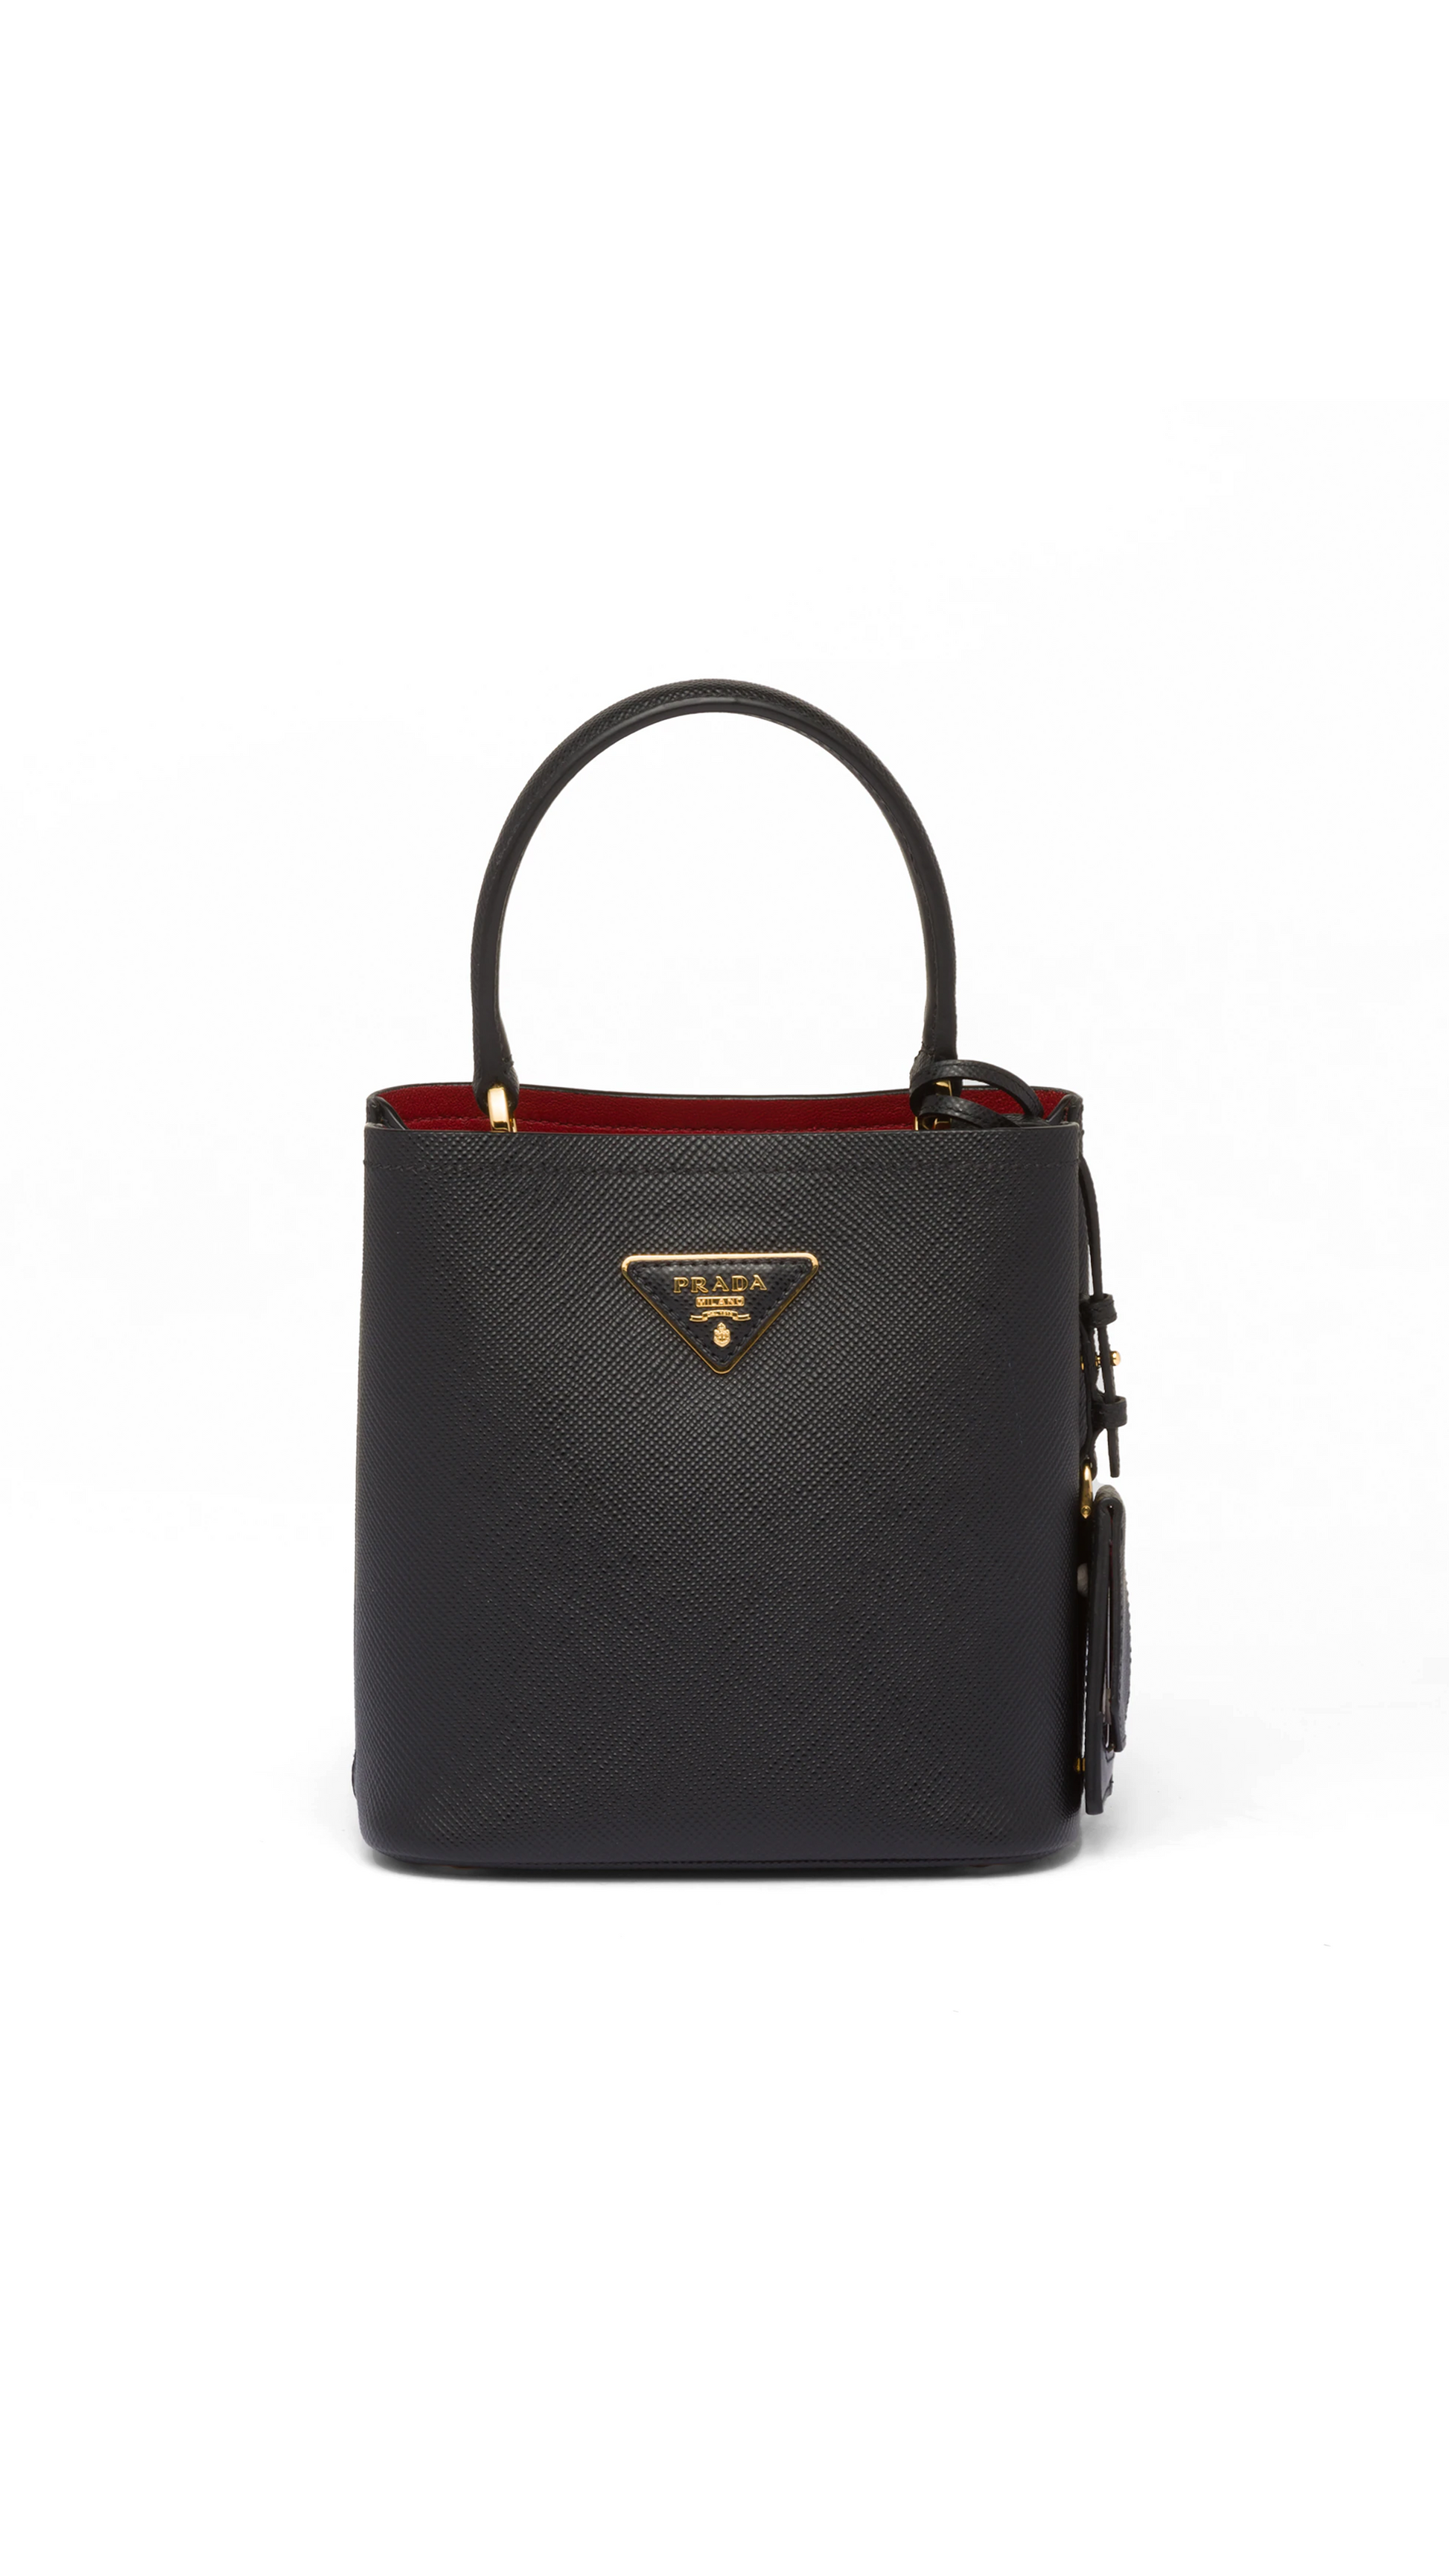 Prada Black Saffiano Leather Medium Panier Top Handle Bag Prada